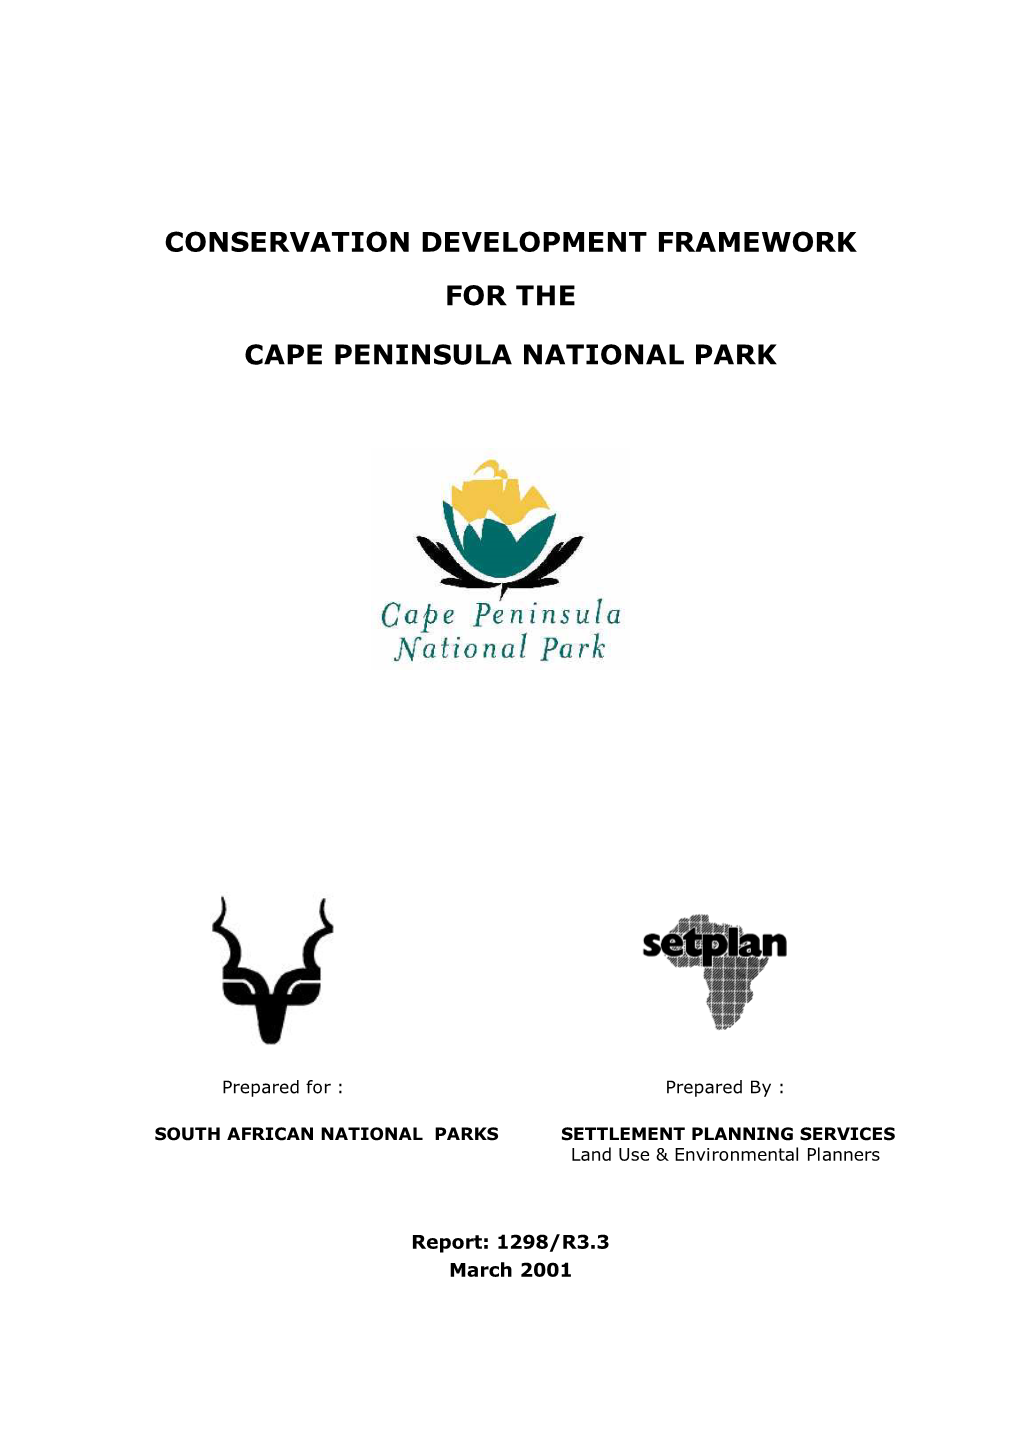 Conservation Development Framework for the Cape Peninsula National Park